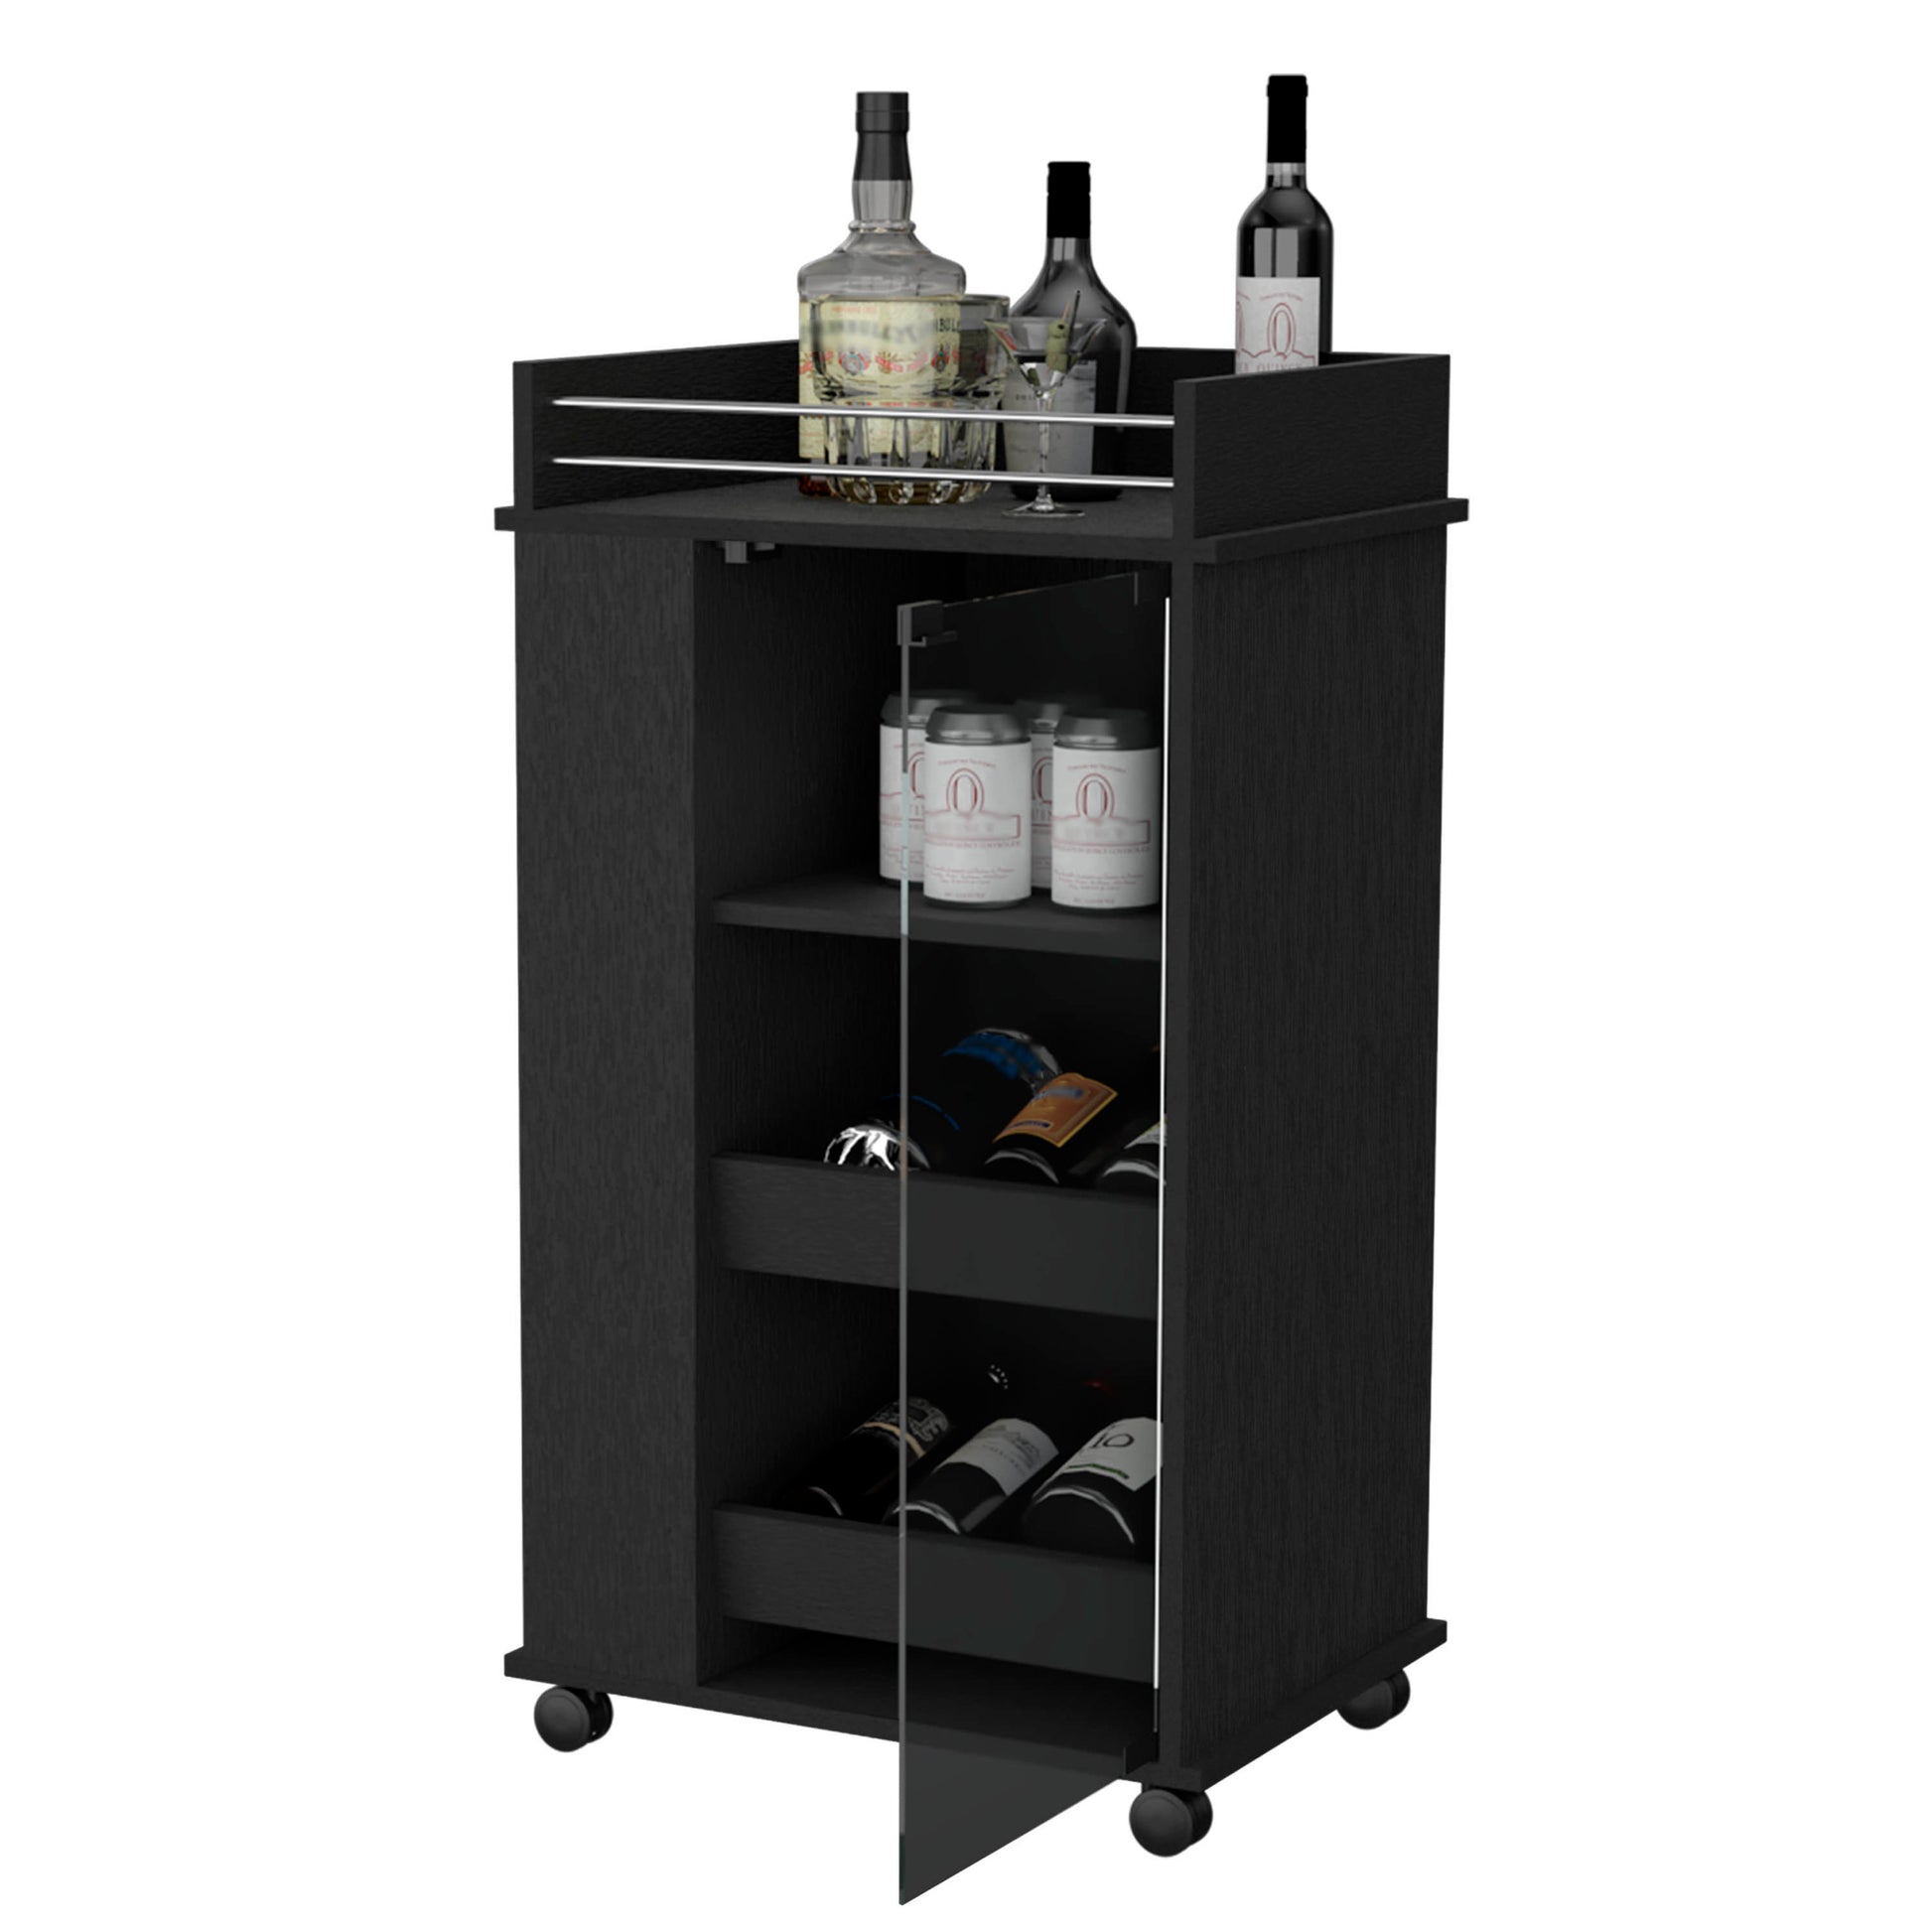 Lusk Bar Cart With 2 Bottle Holder Shelf, Glass